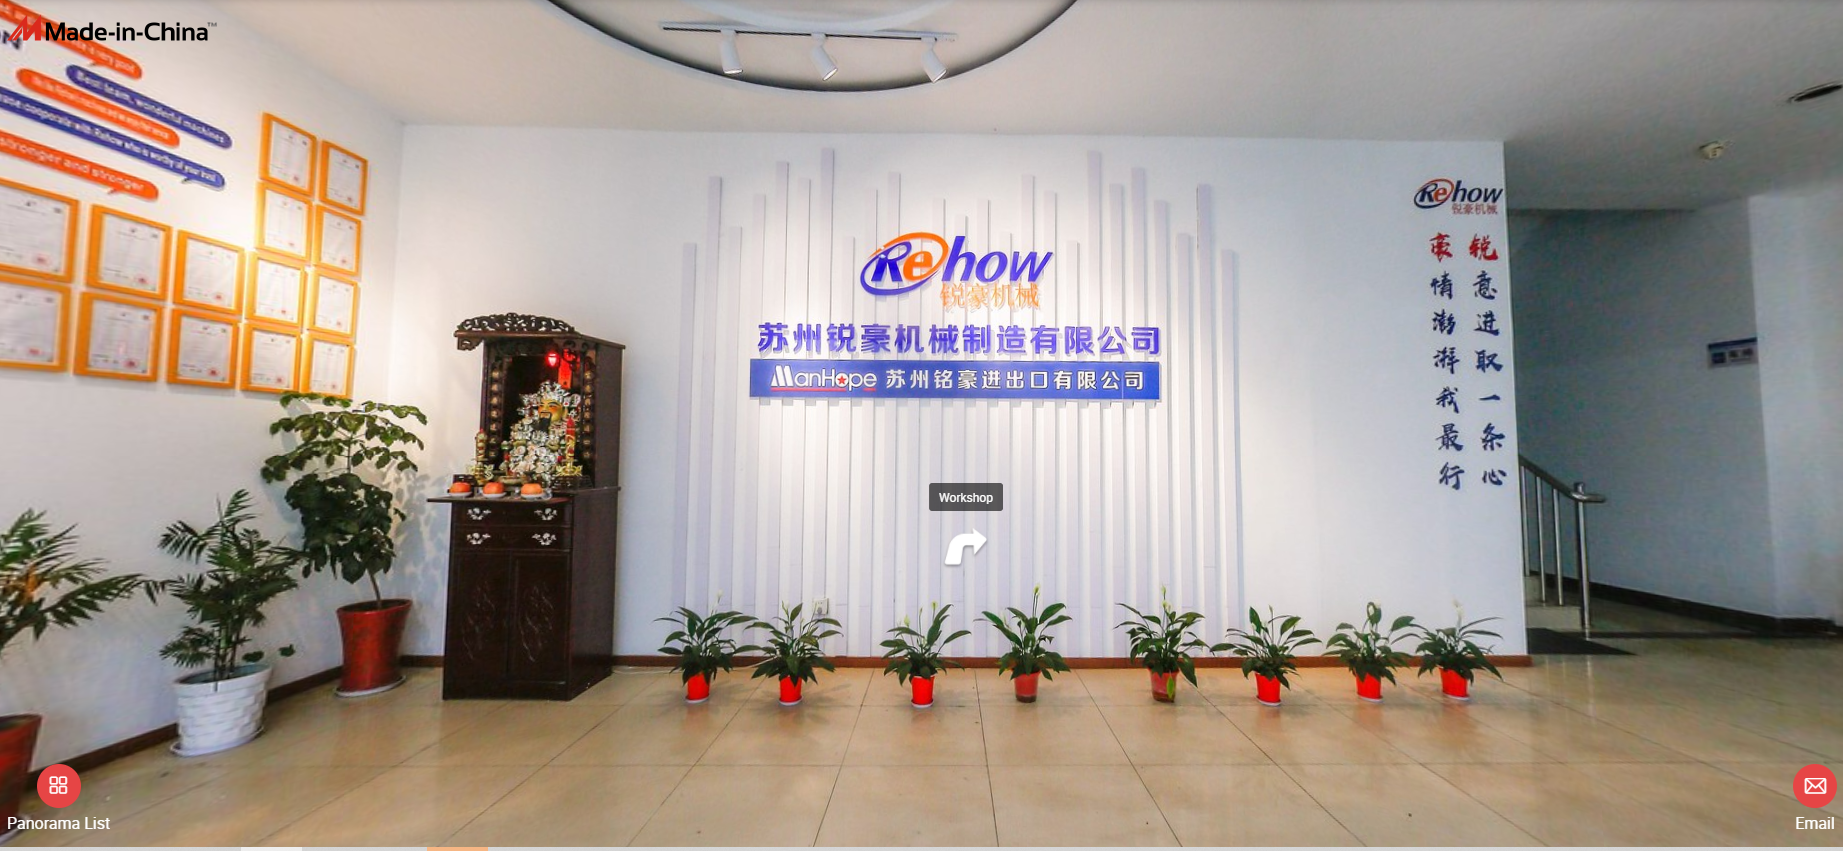 Suzhou ReHow Machinery Manufacturing Co.,Ltd